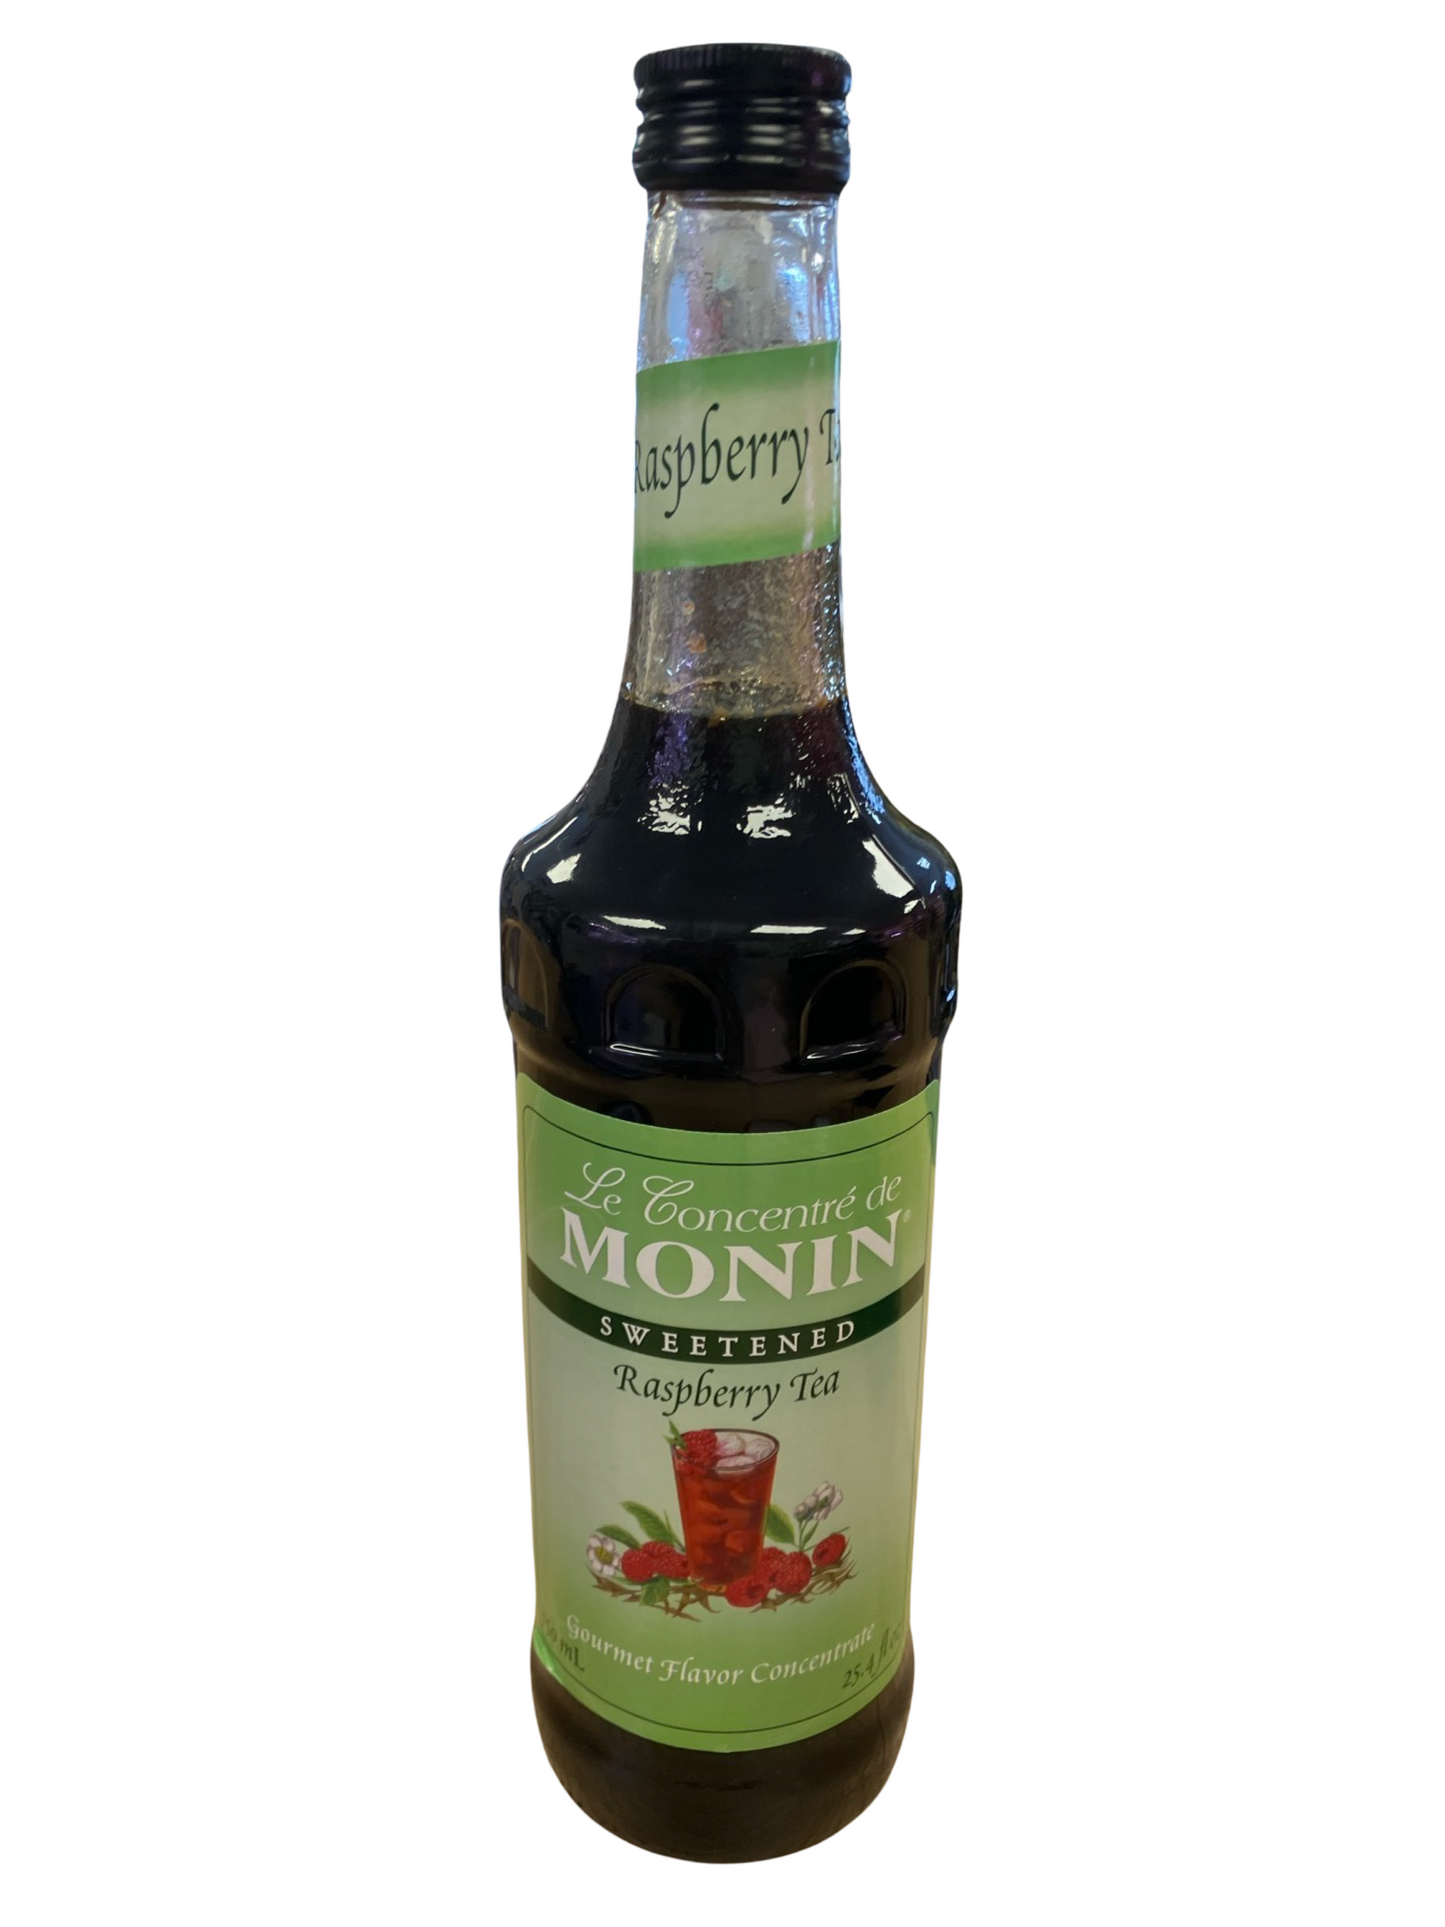 Monin - Sweetened Raspberry Tea Concentrate - 750ml - Glass Bottle